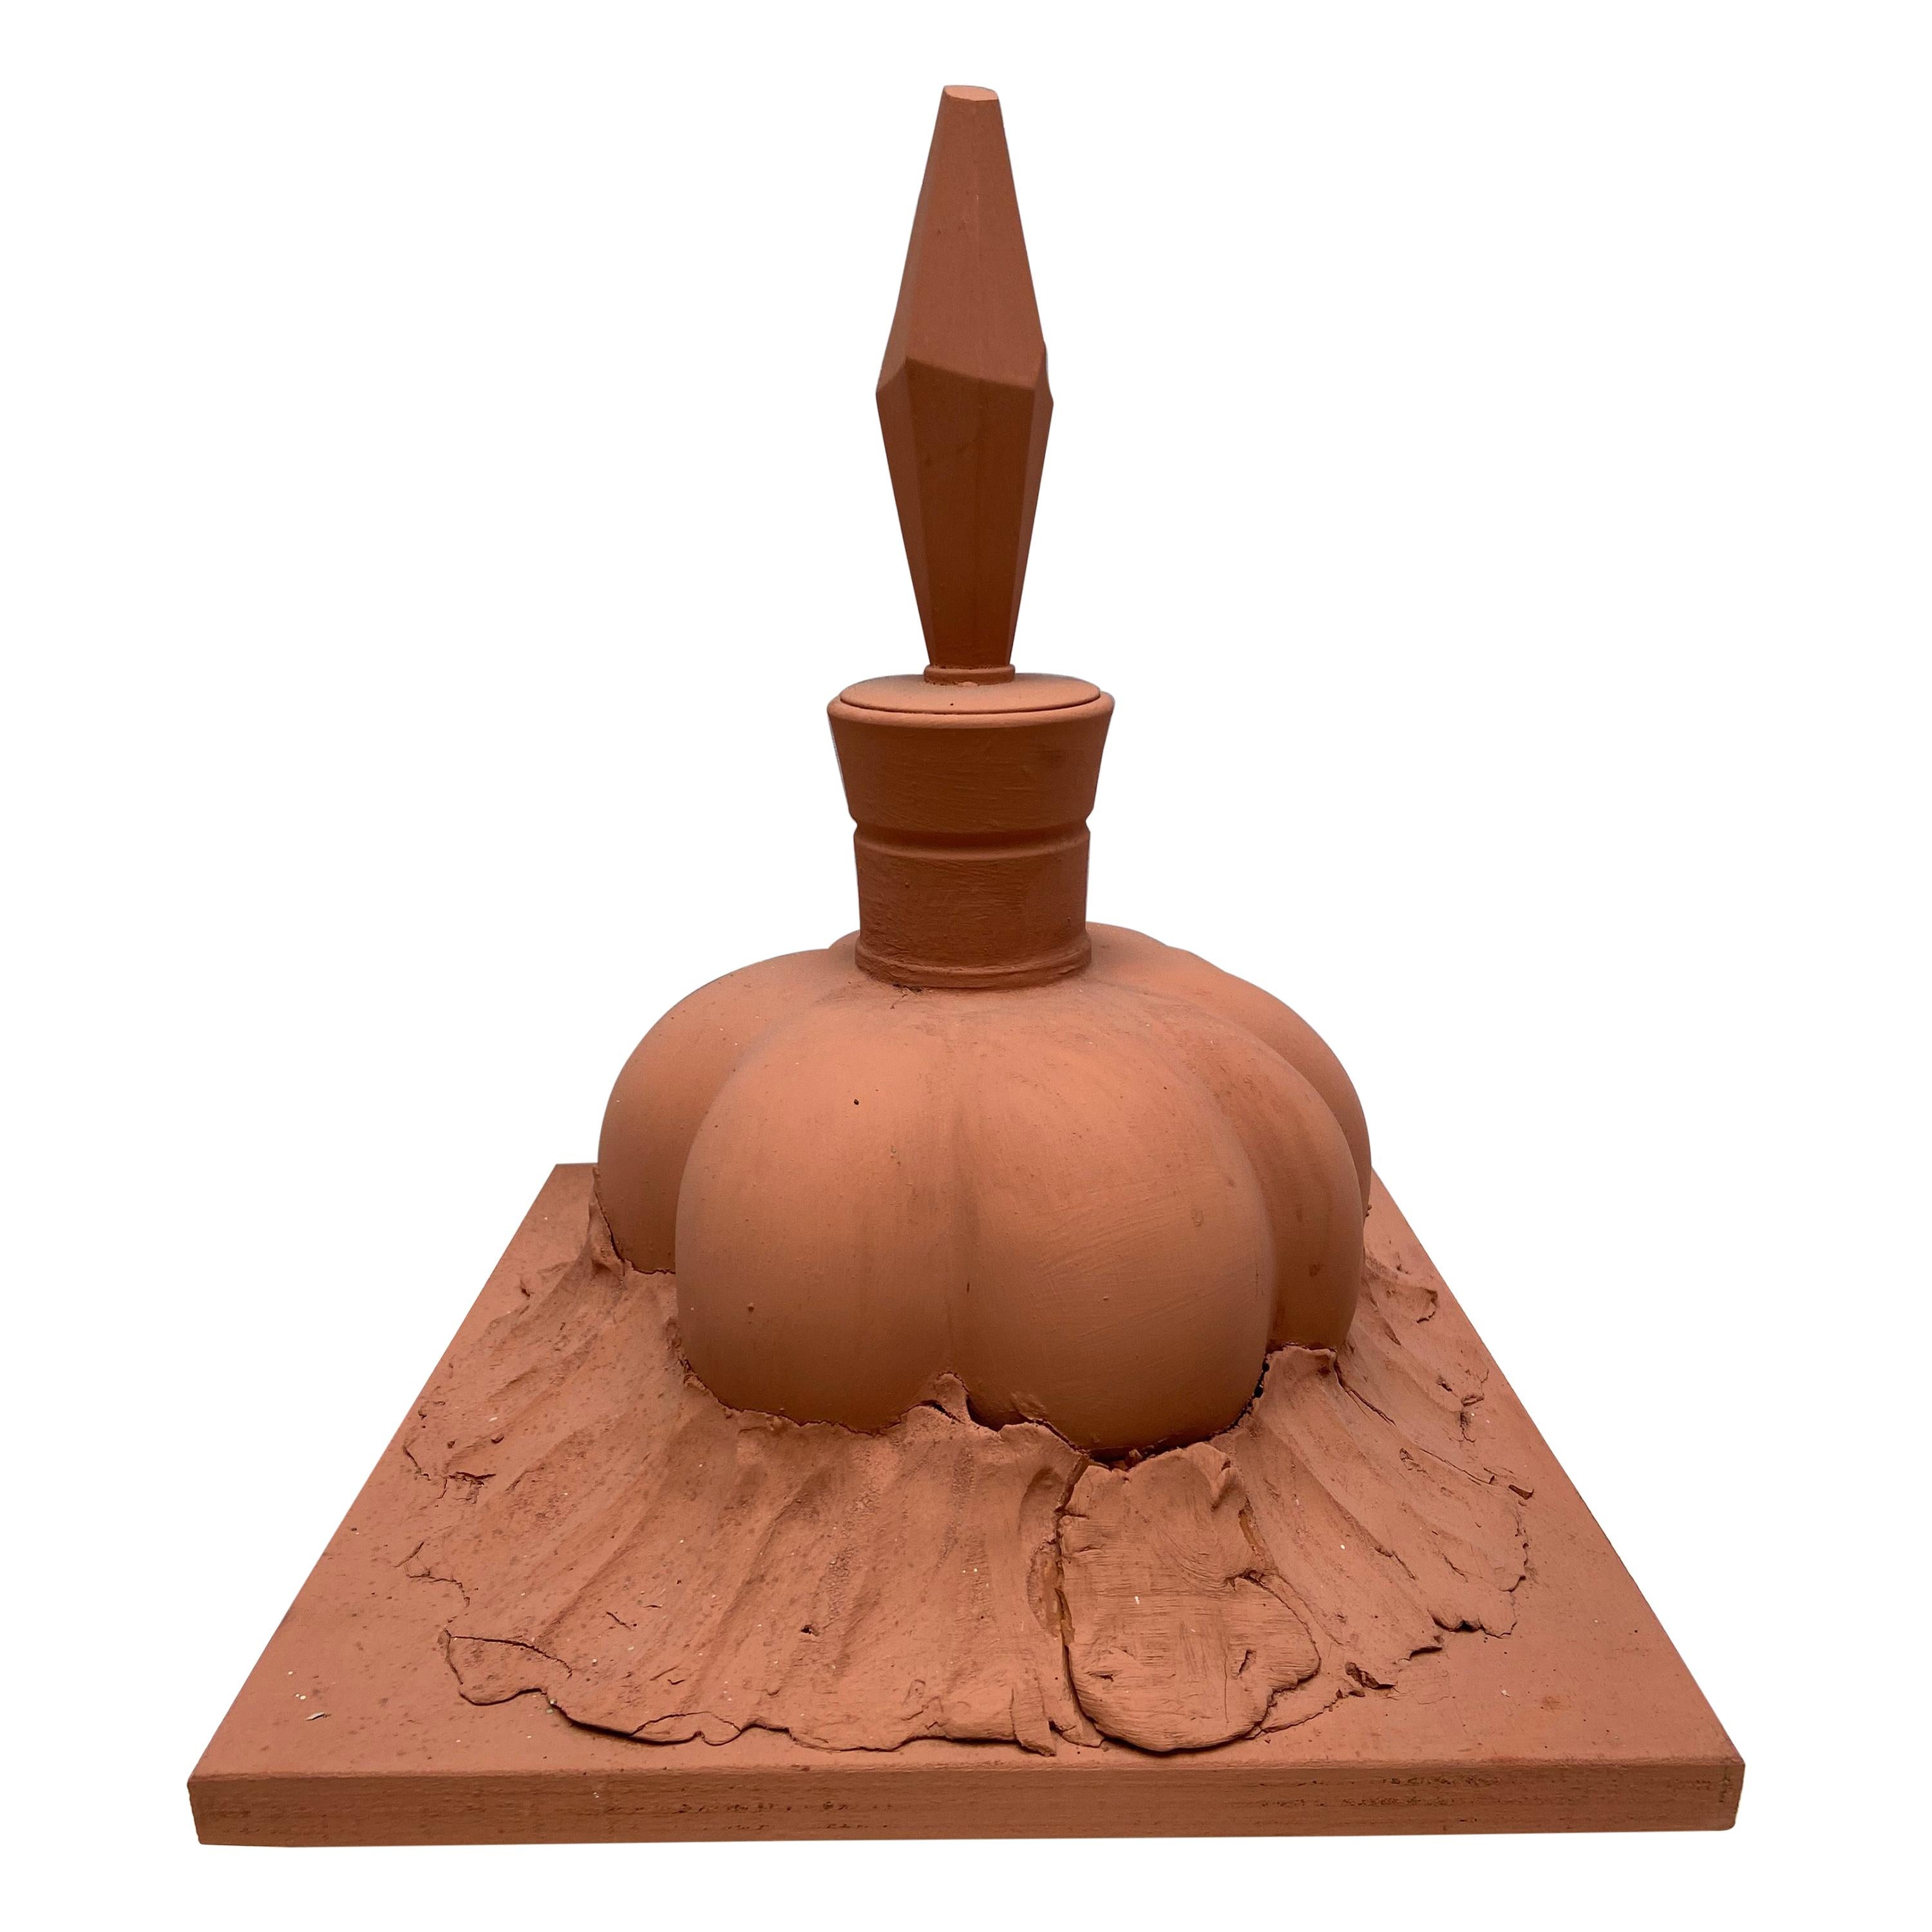 Sculpture « Bitter gourd » en terre cuite de Serge Mansau, 1990